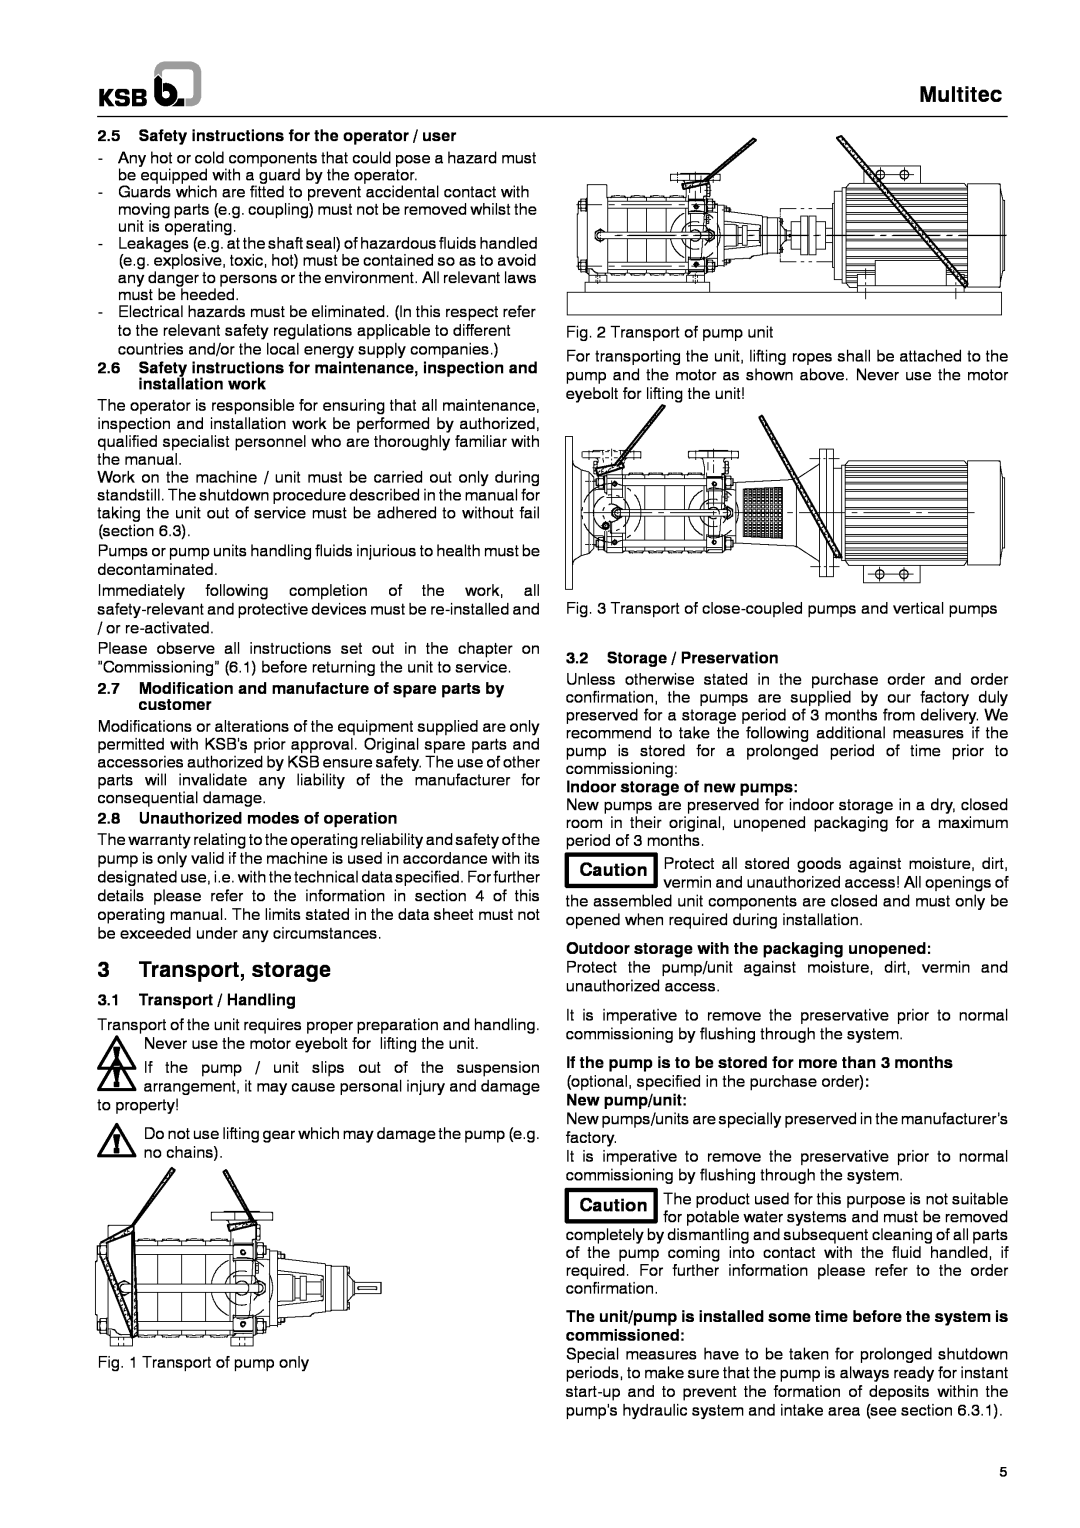 Multitech 1777.8/7-10 G3 operating instructions 3Transport, storage, Multitec 